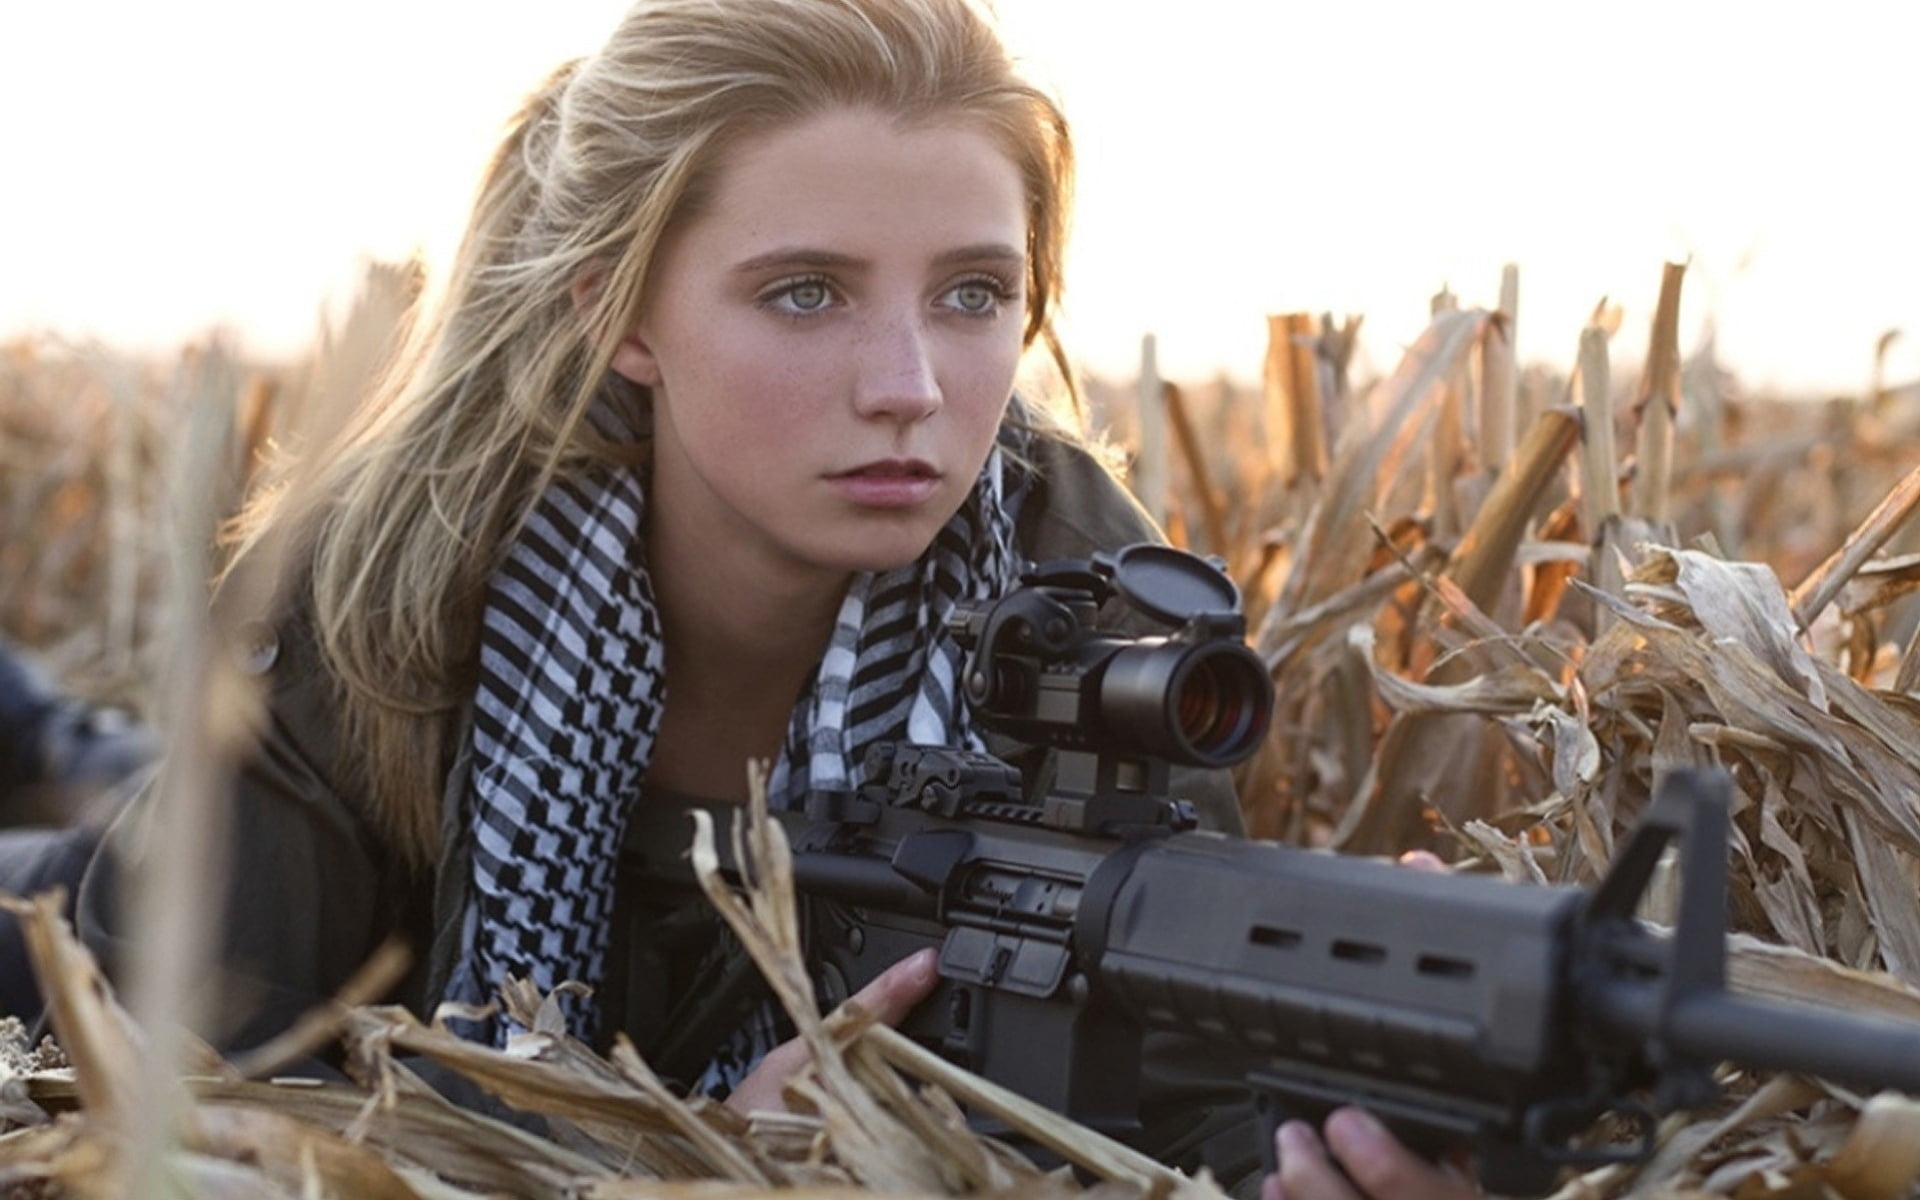 black sniper rifle, grass, girl, machine, assault rifle, warrior girl